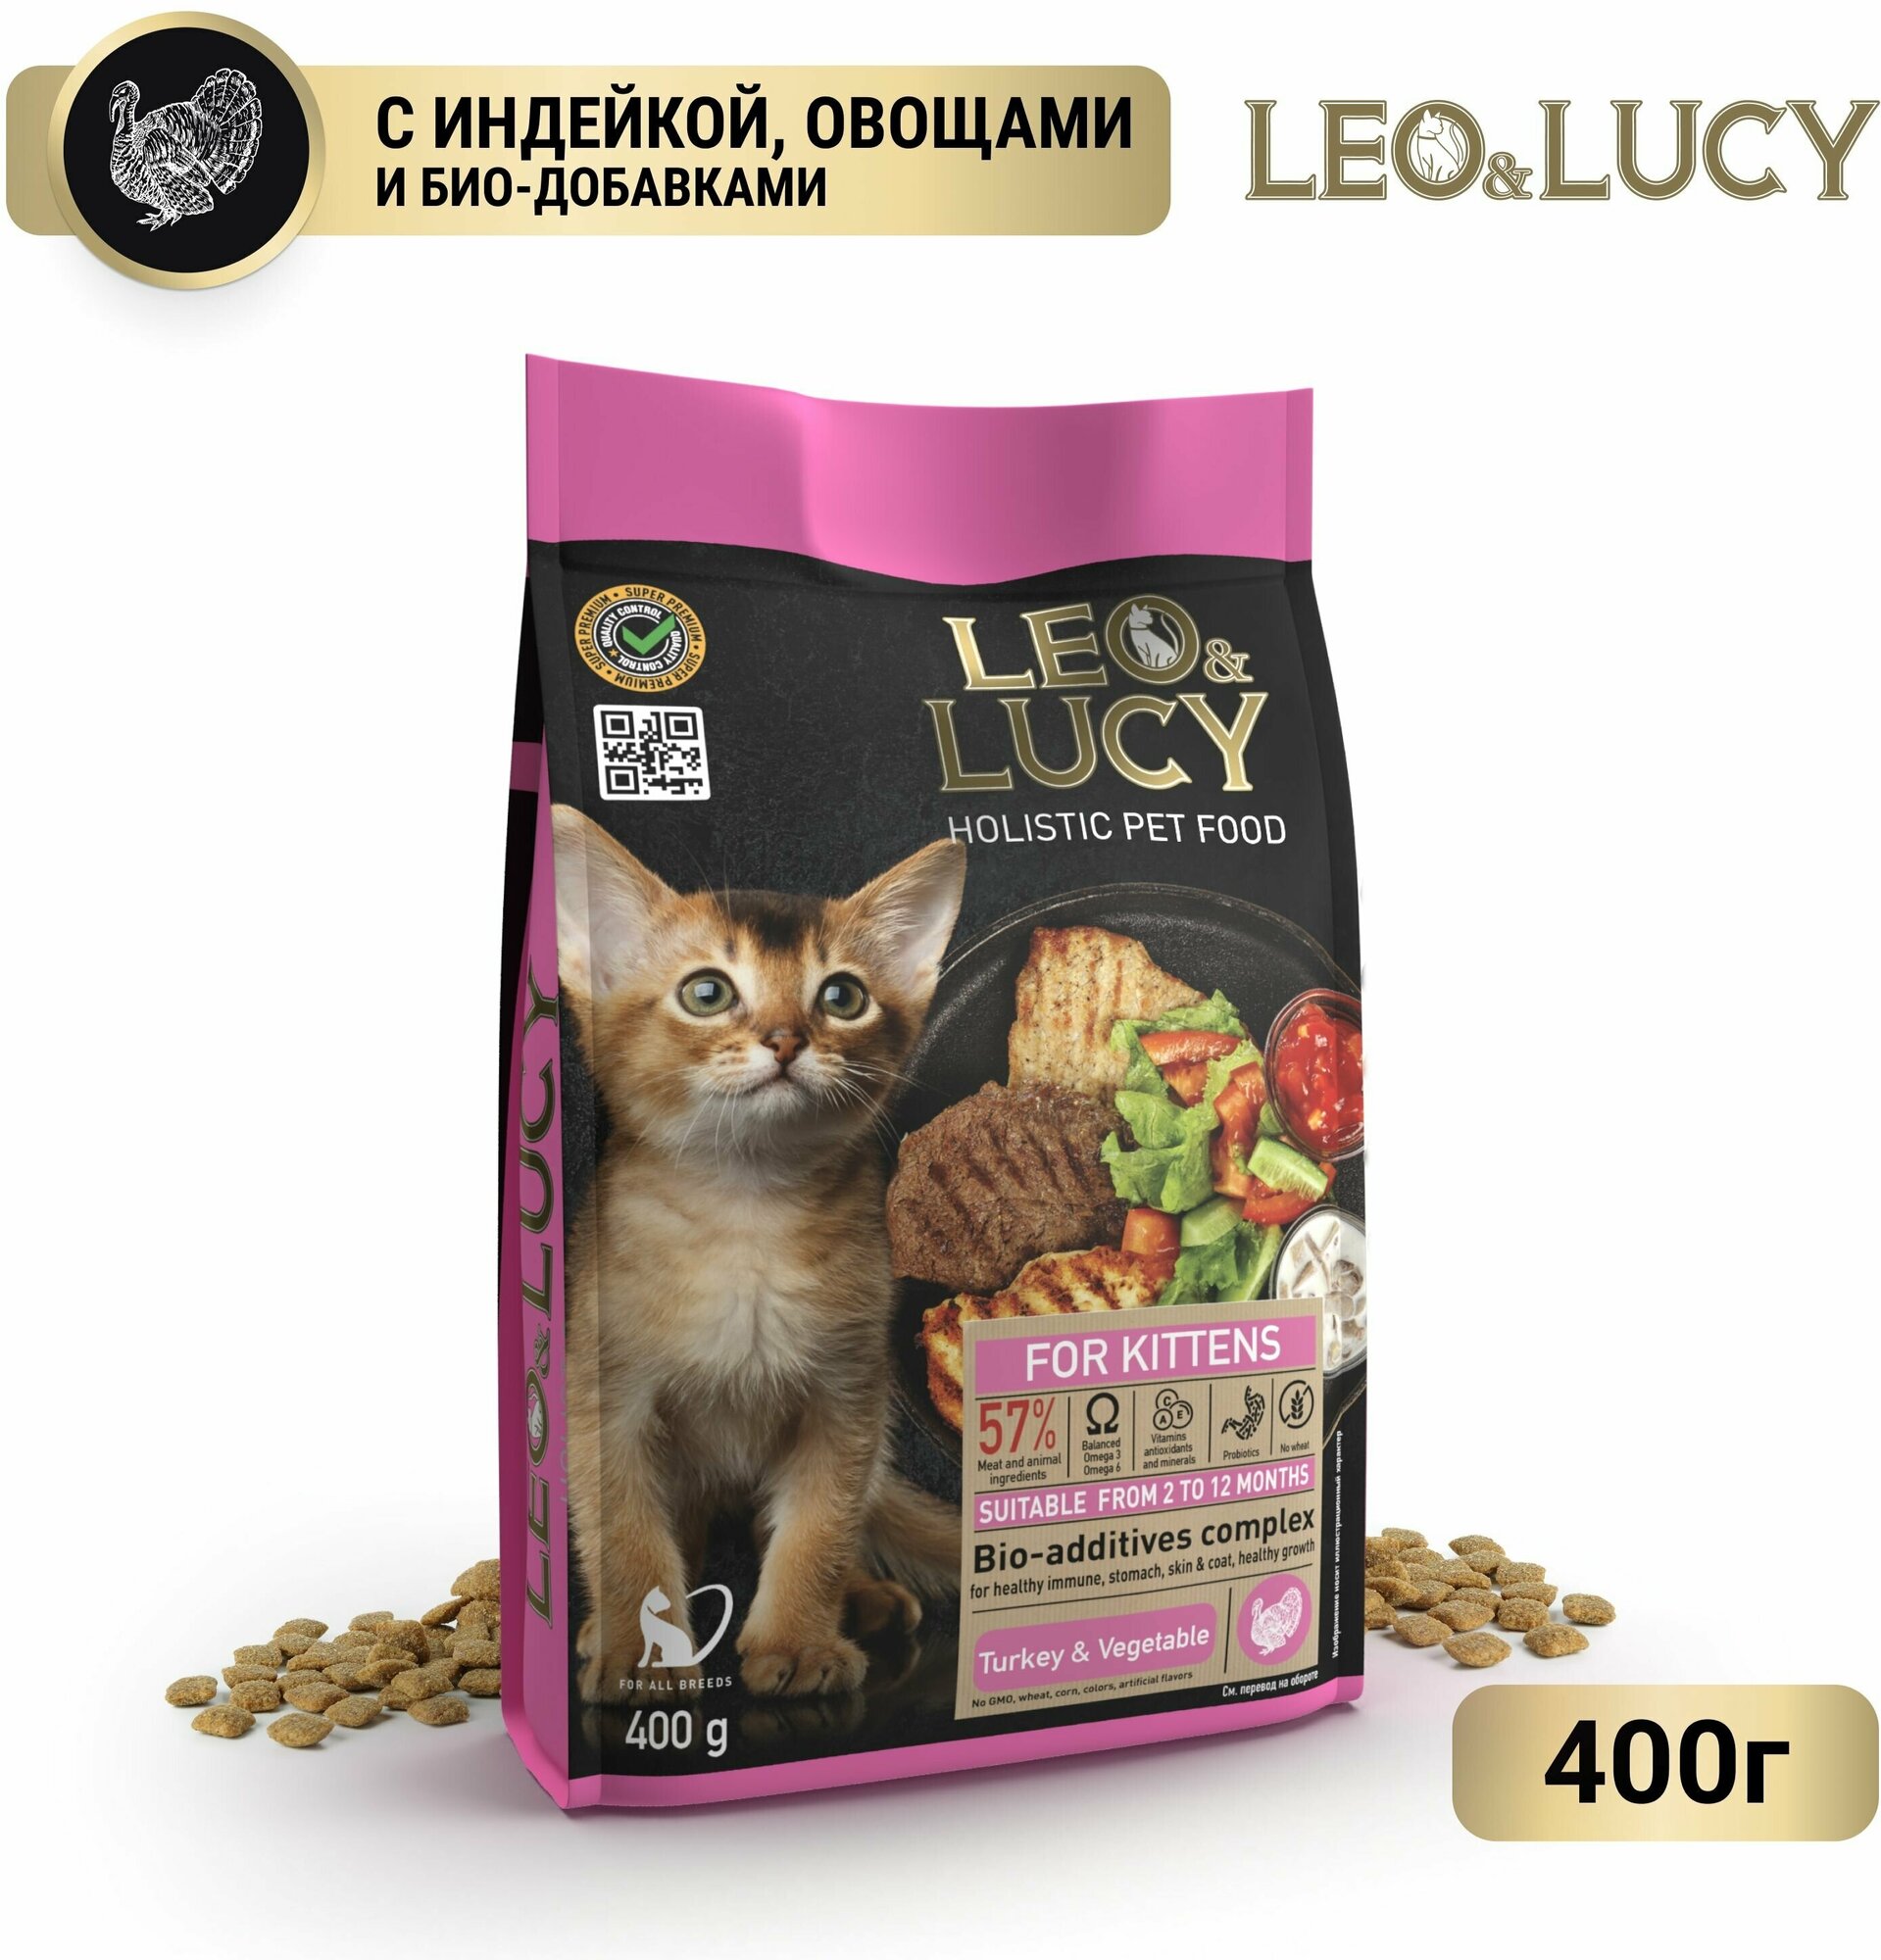 LEO&LUCY cухой холистик корм полнорационный для котят с индейкой, овощами и биодобавками, 400 г.